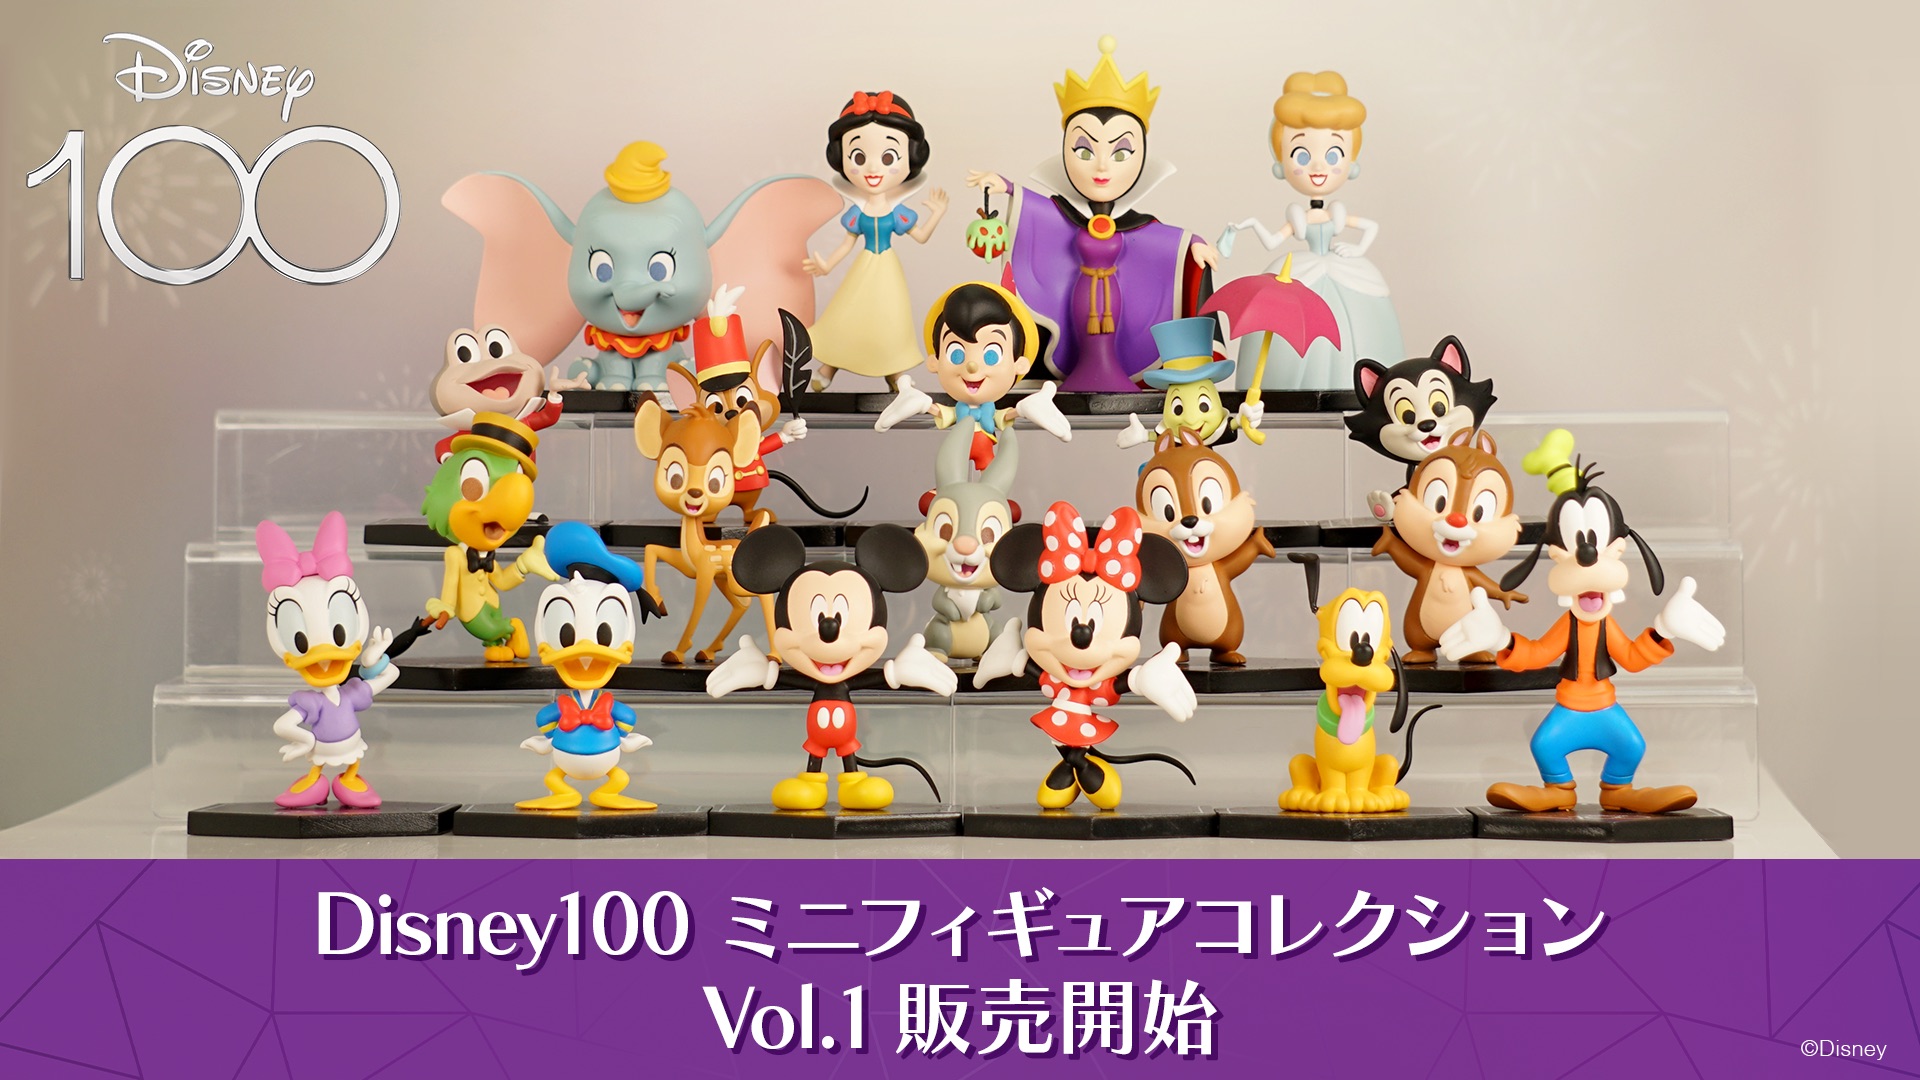 Disney100 ミニフィギュアコレクション Vol.1」の一般販売がファミマに ...